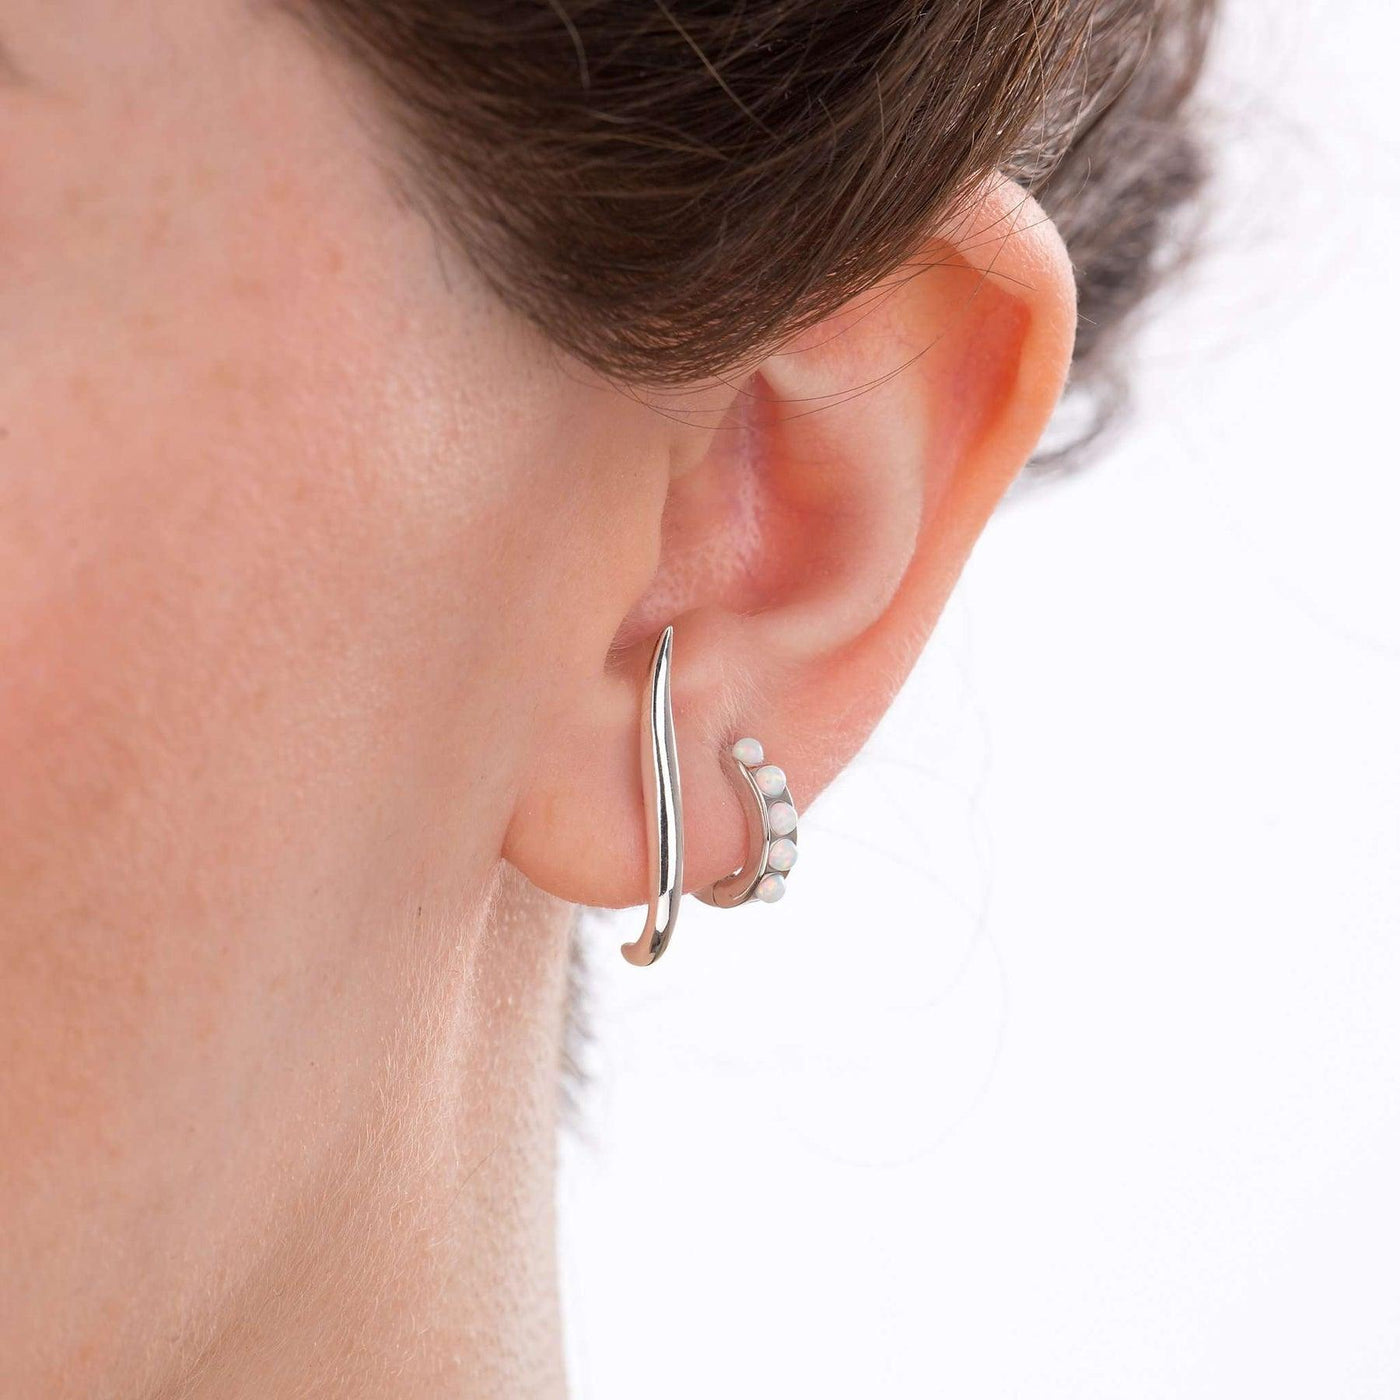 Scream Pretty Huggie Earrings with White Opal Stones - Rococo Jewellery